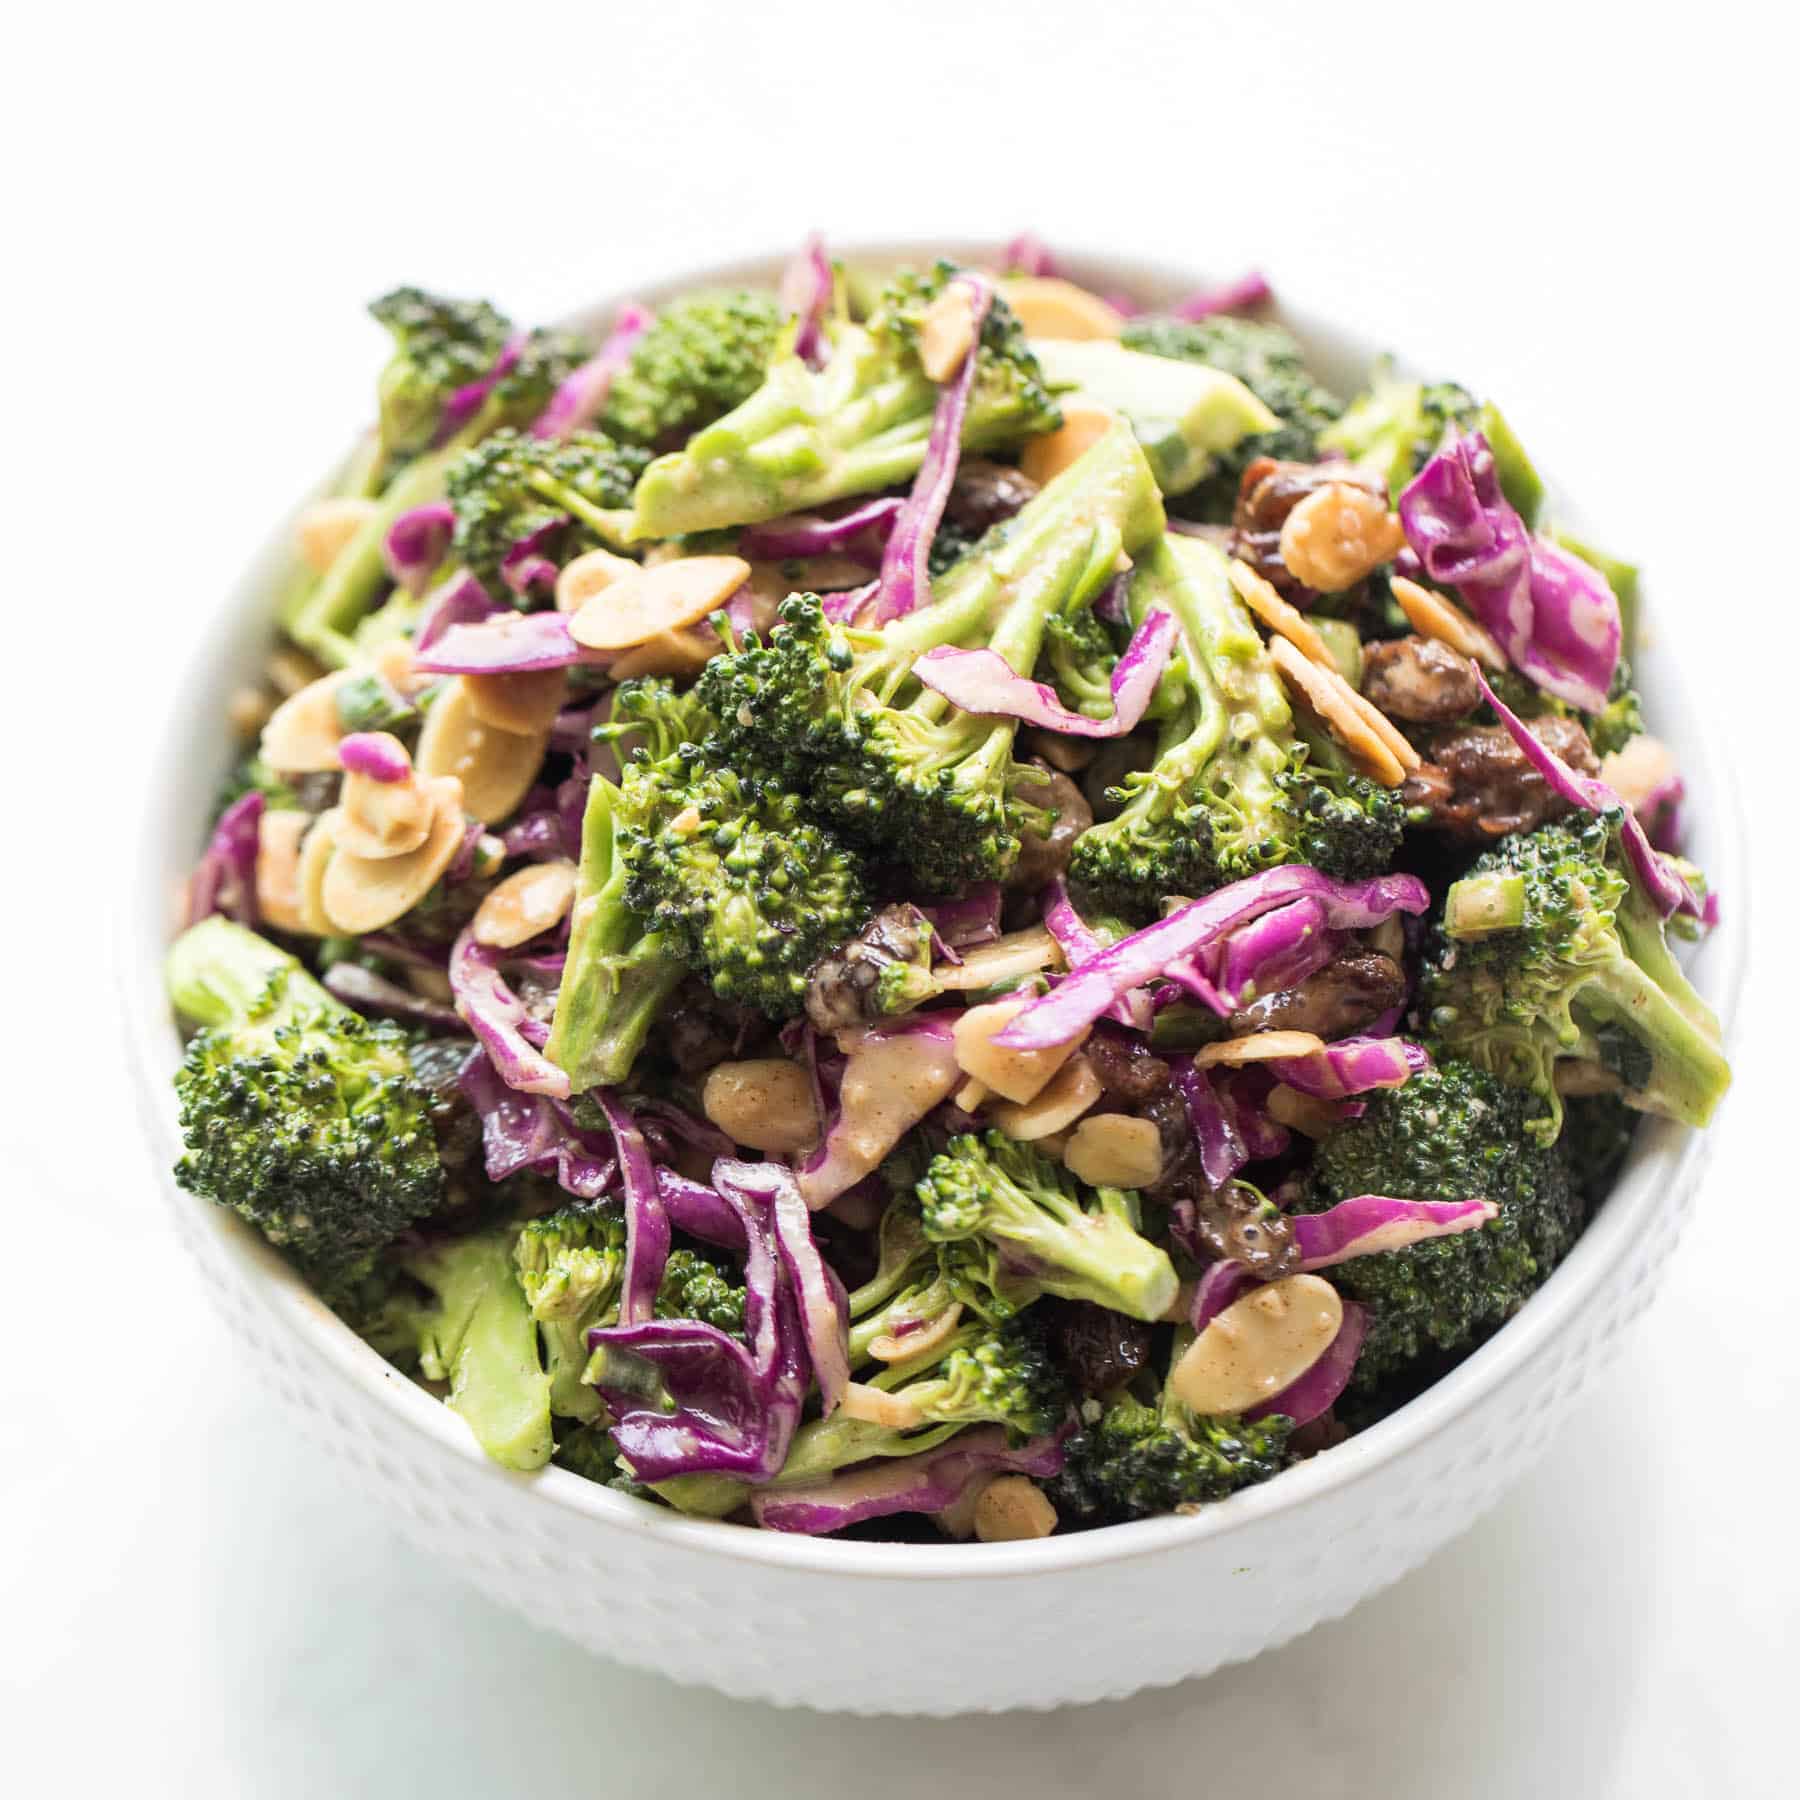 Paleo Broccoli Salad- My go-to Party Salad - Nesting With Grace